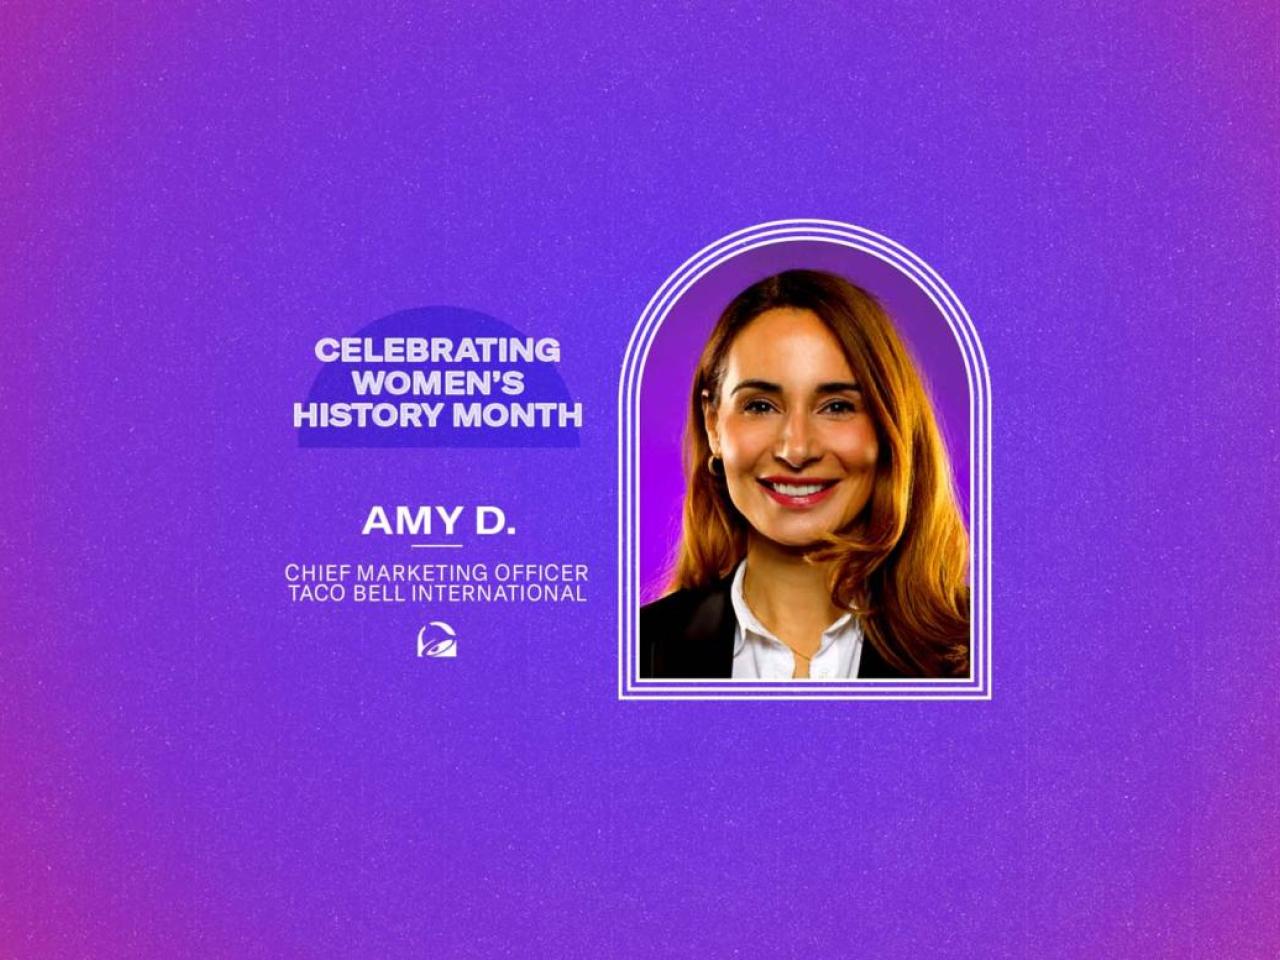 Amy D. "Celebrating women's history month".